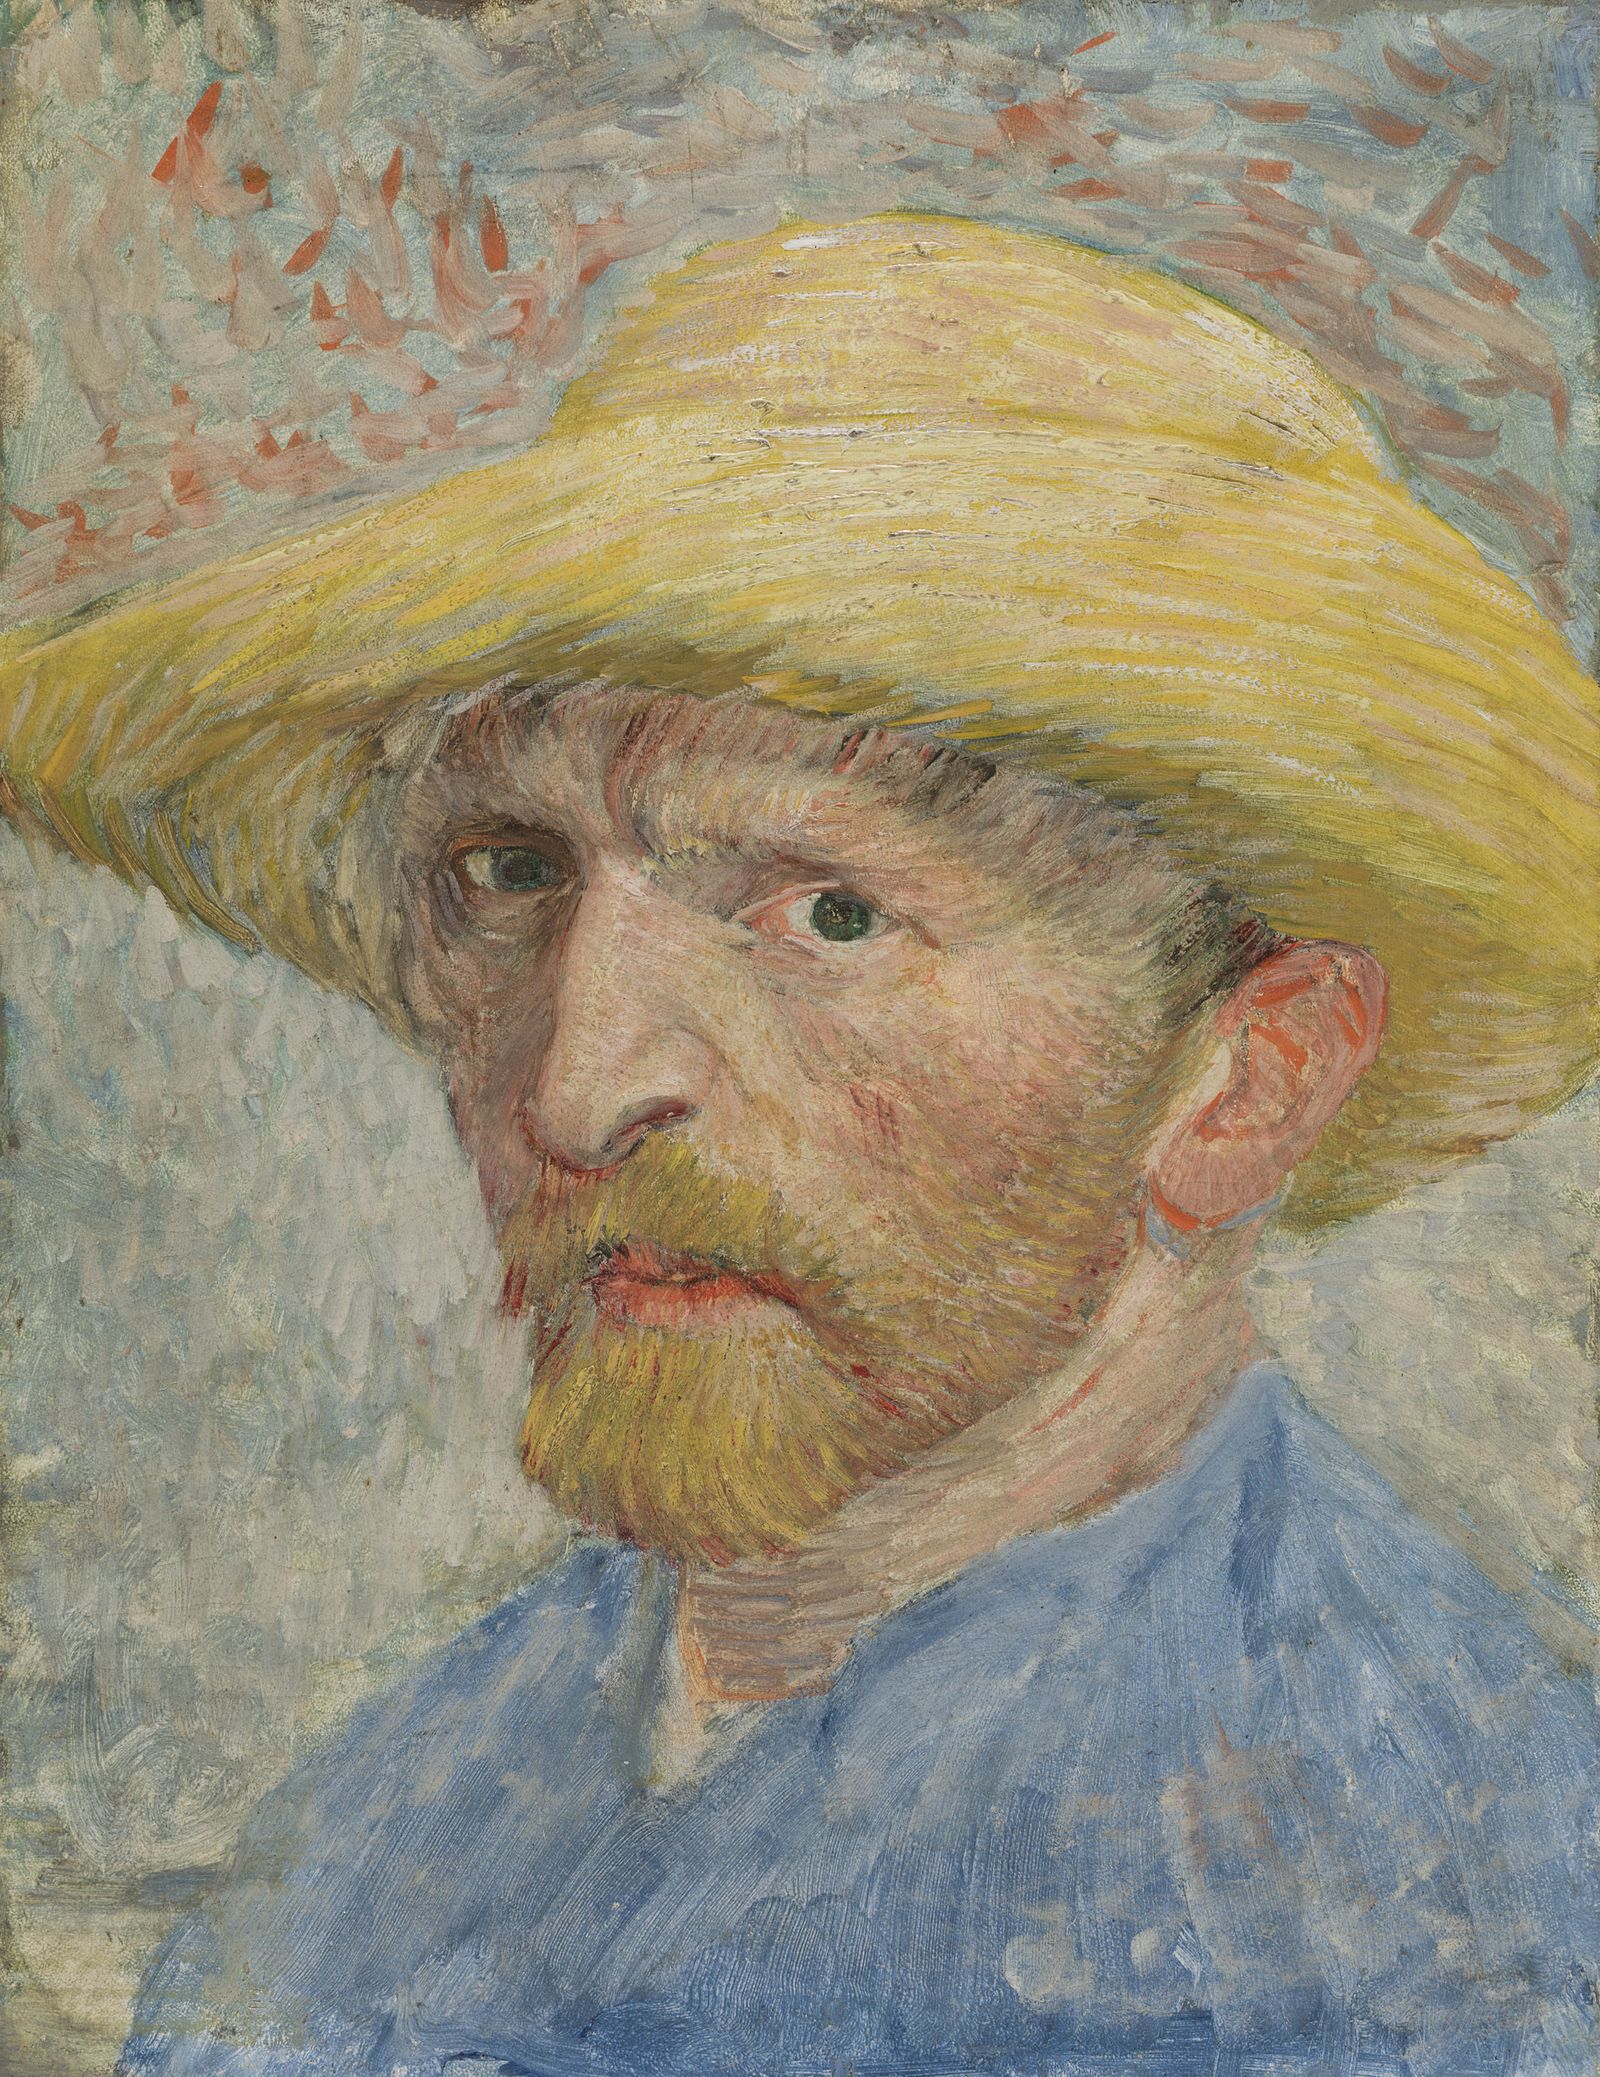 How America Saw Vincent van Gogh | Smart News